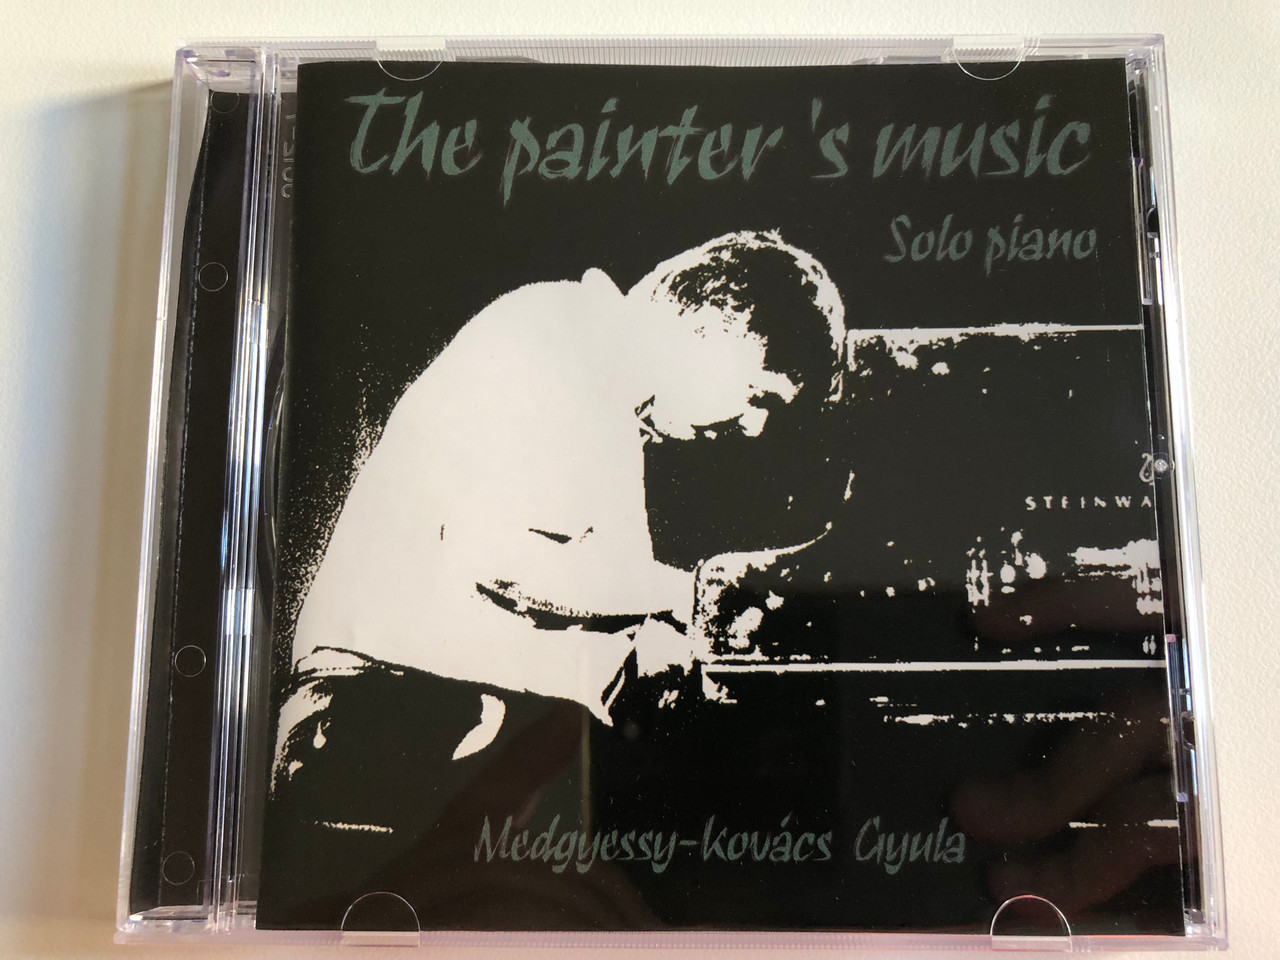 The Painter's Music - Solo Piano / Medgyessy-Kovacs Gyula / BMM Audio CD  2002 / BMM 0207 3822 4641 - bibleinmylanguage